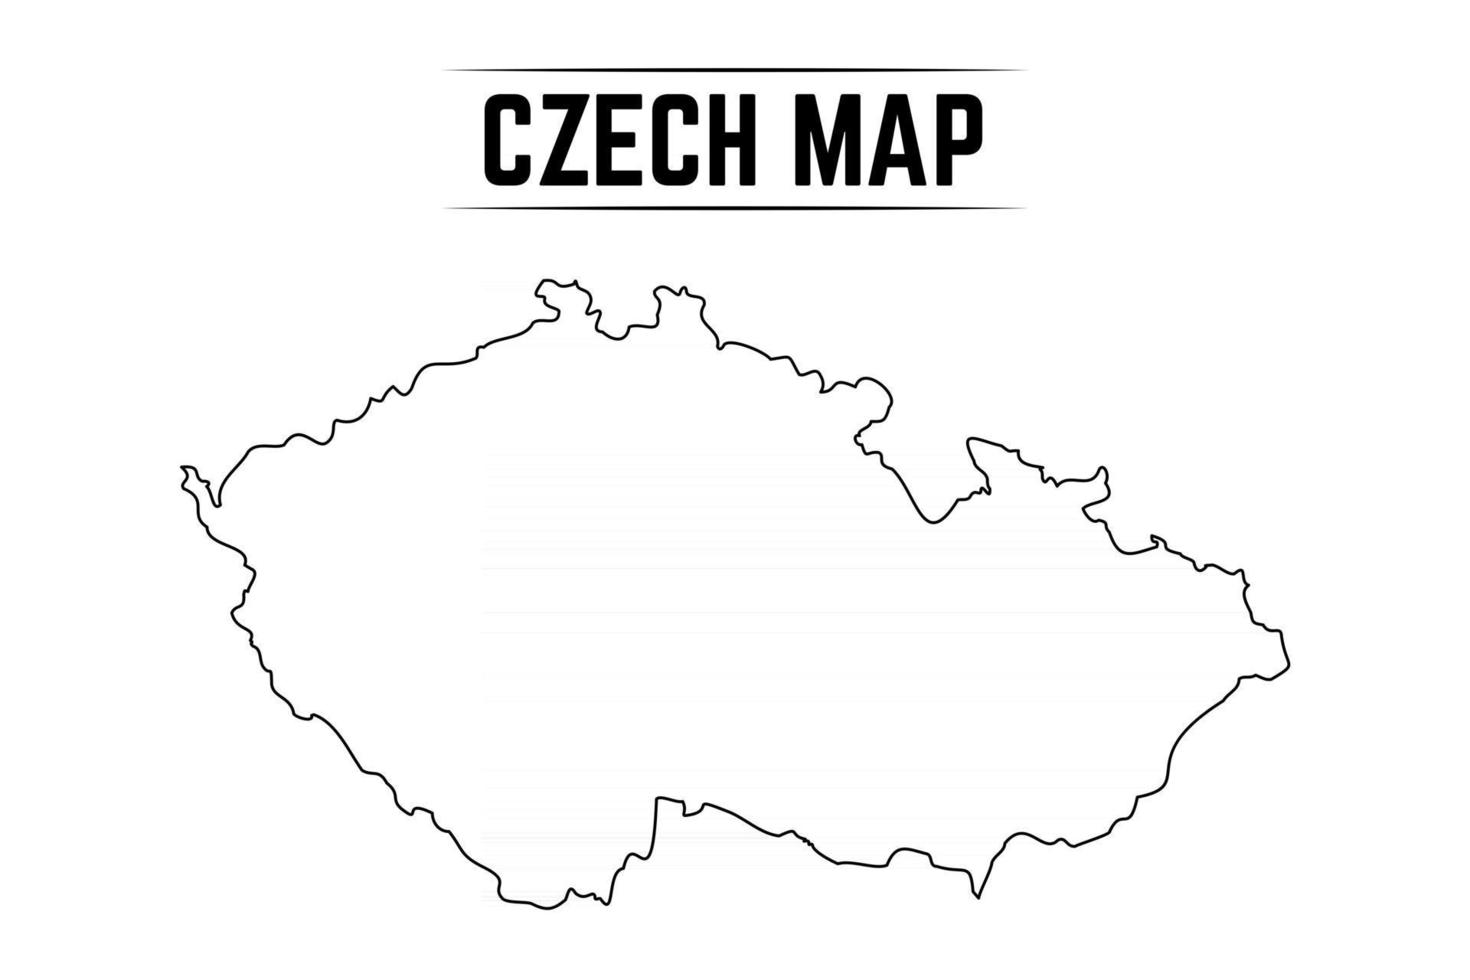 delinear mapa simples da república checa vetor